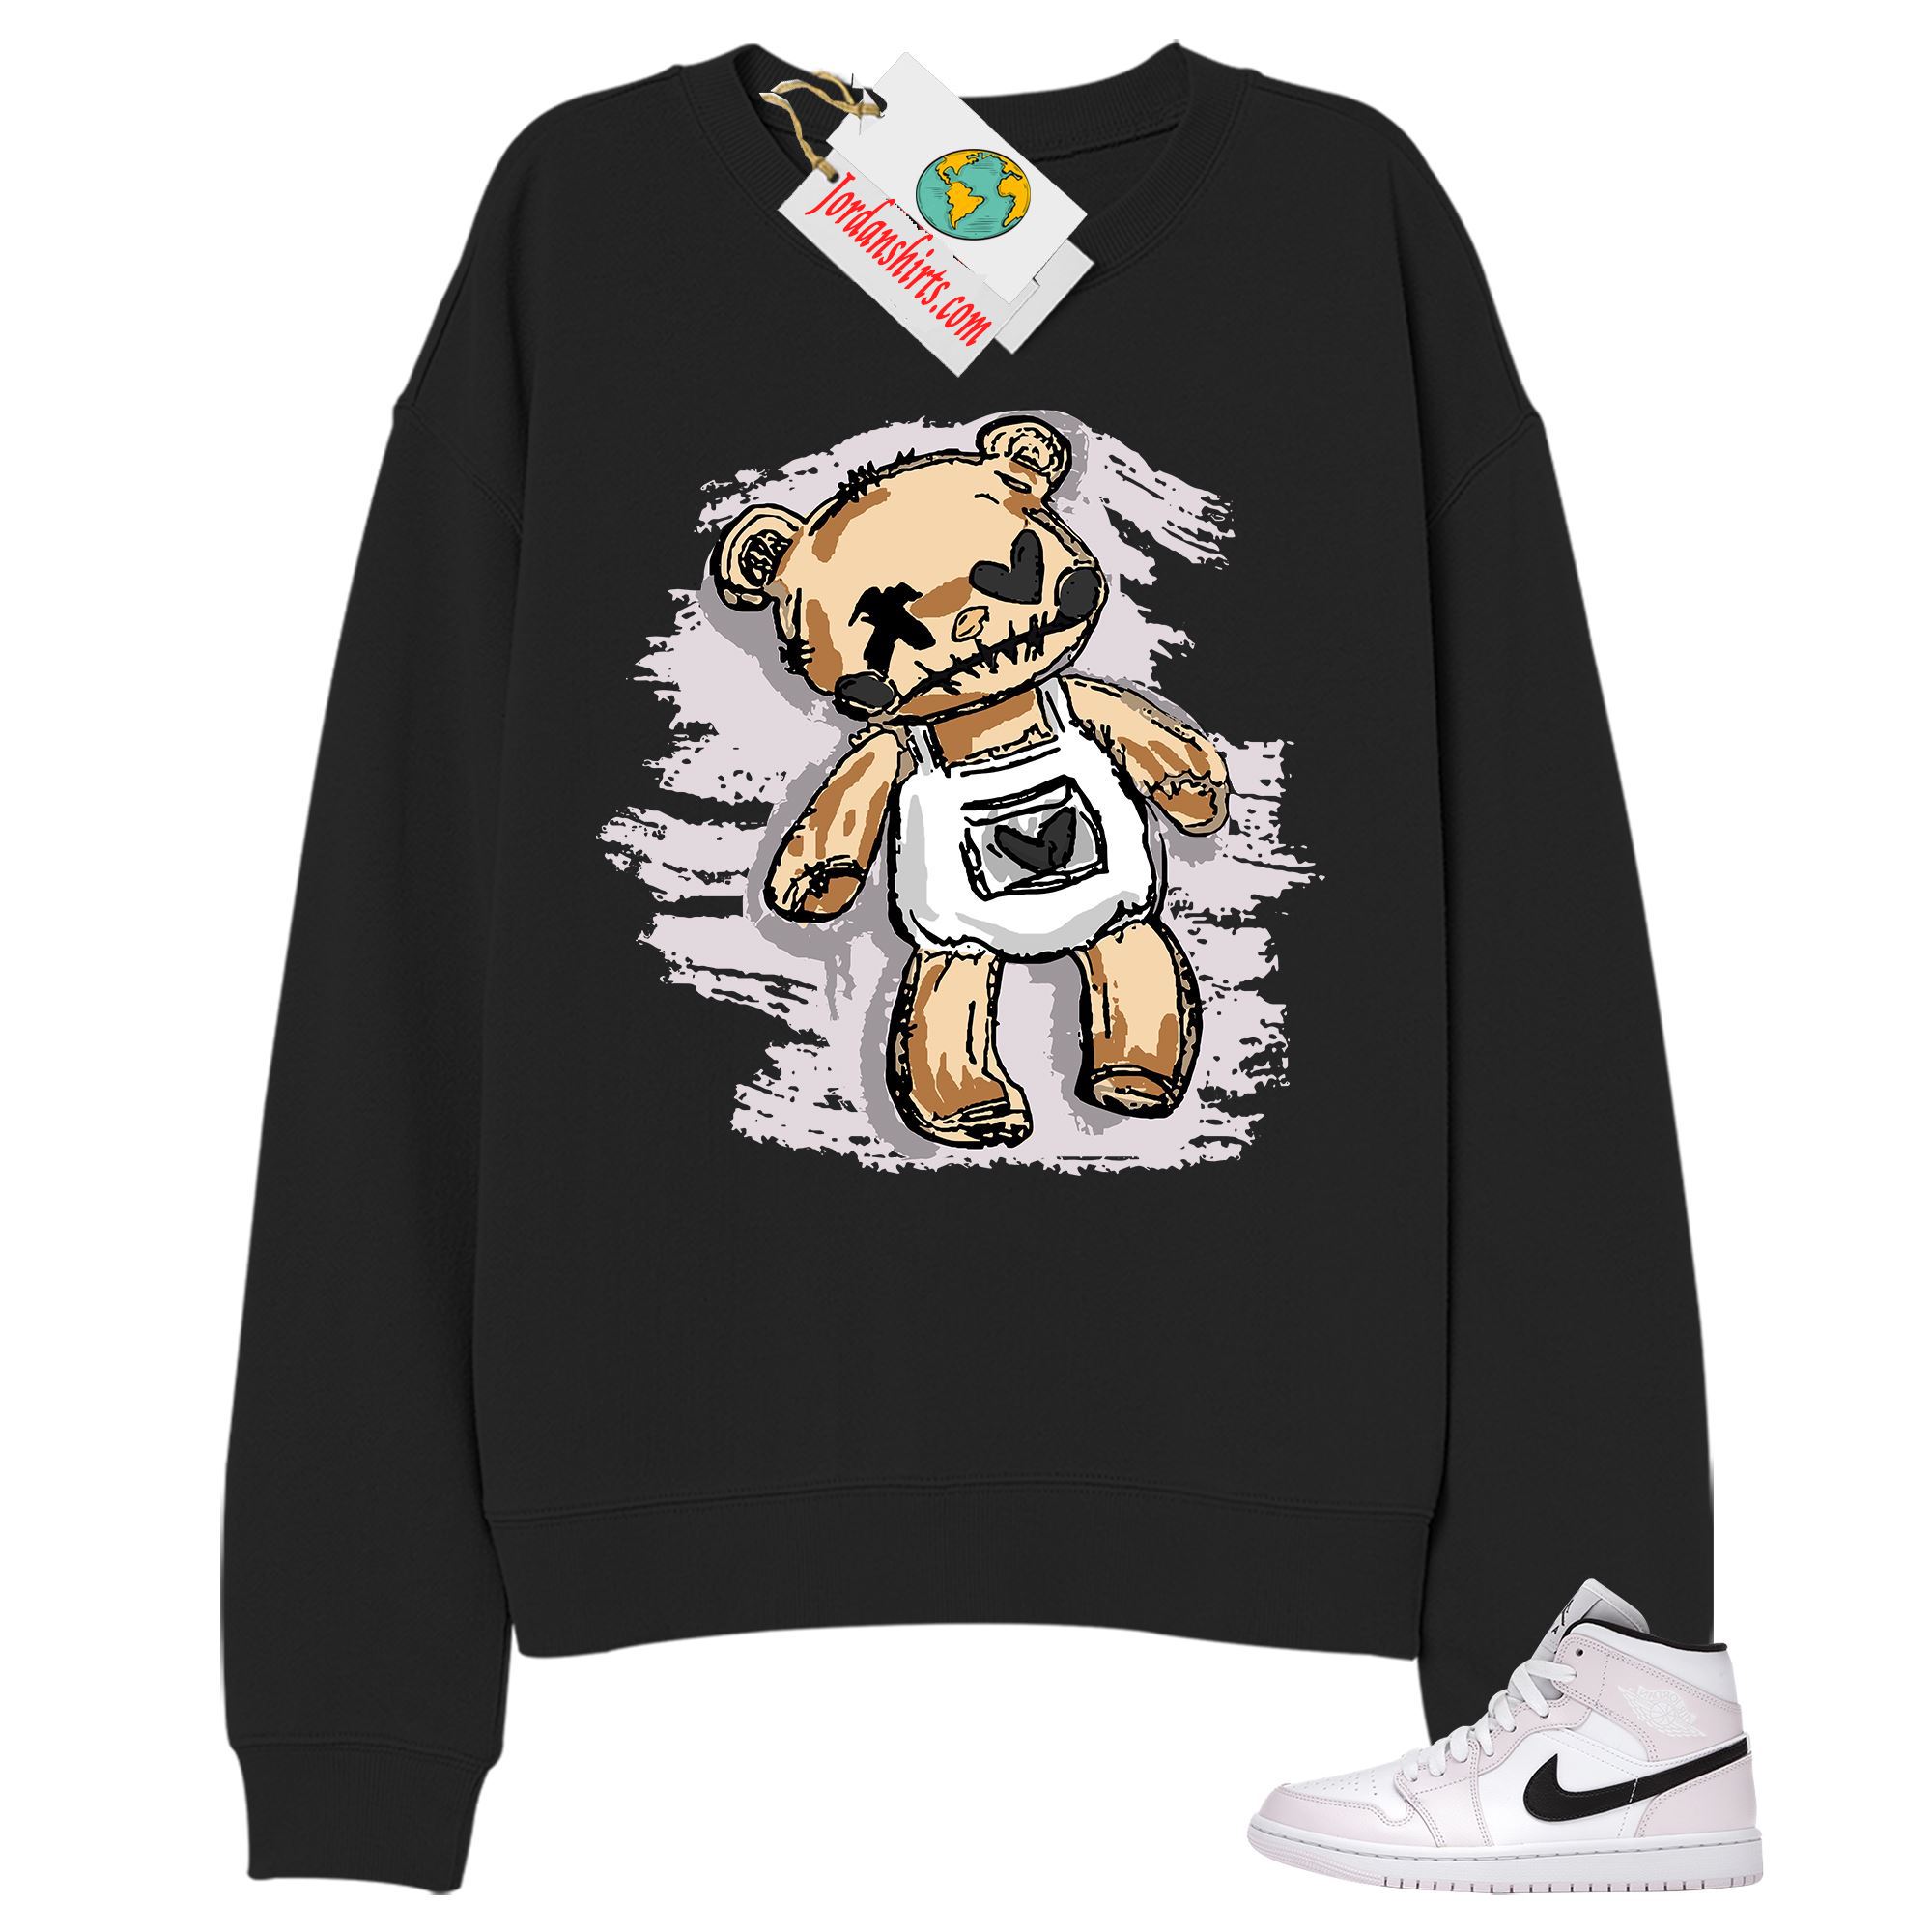 Jordan 1 Sweatshirt, Teddy Bear Broken Heart Black Sweatshirt Air Jordan 1 Barely Rose 1s Full Size Up To 5xl